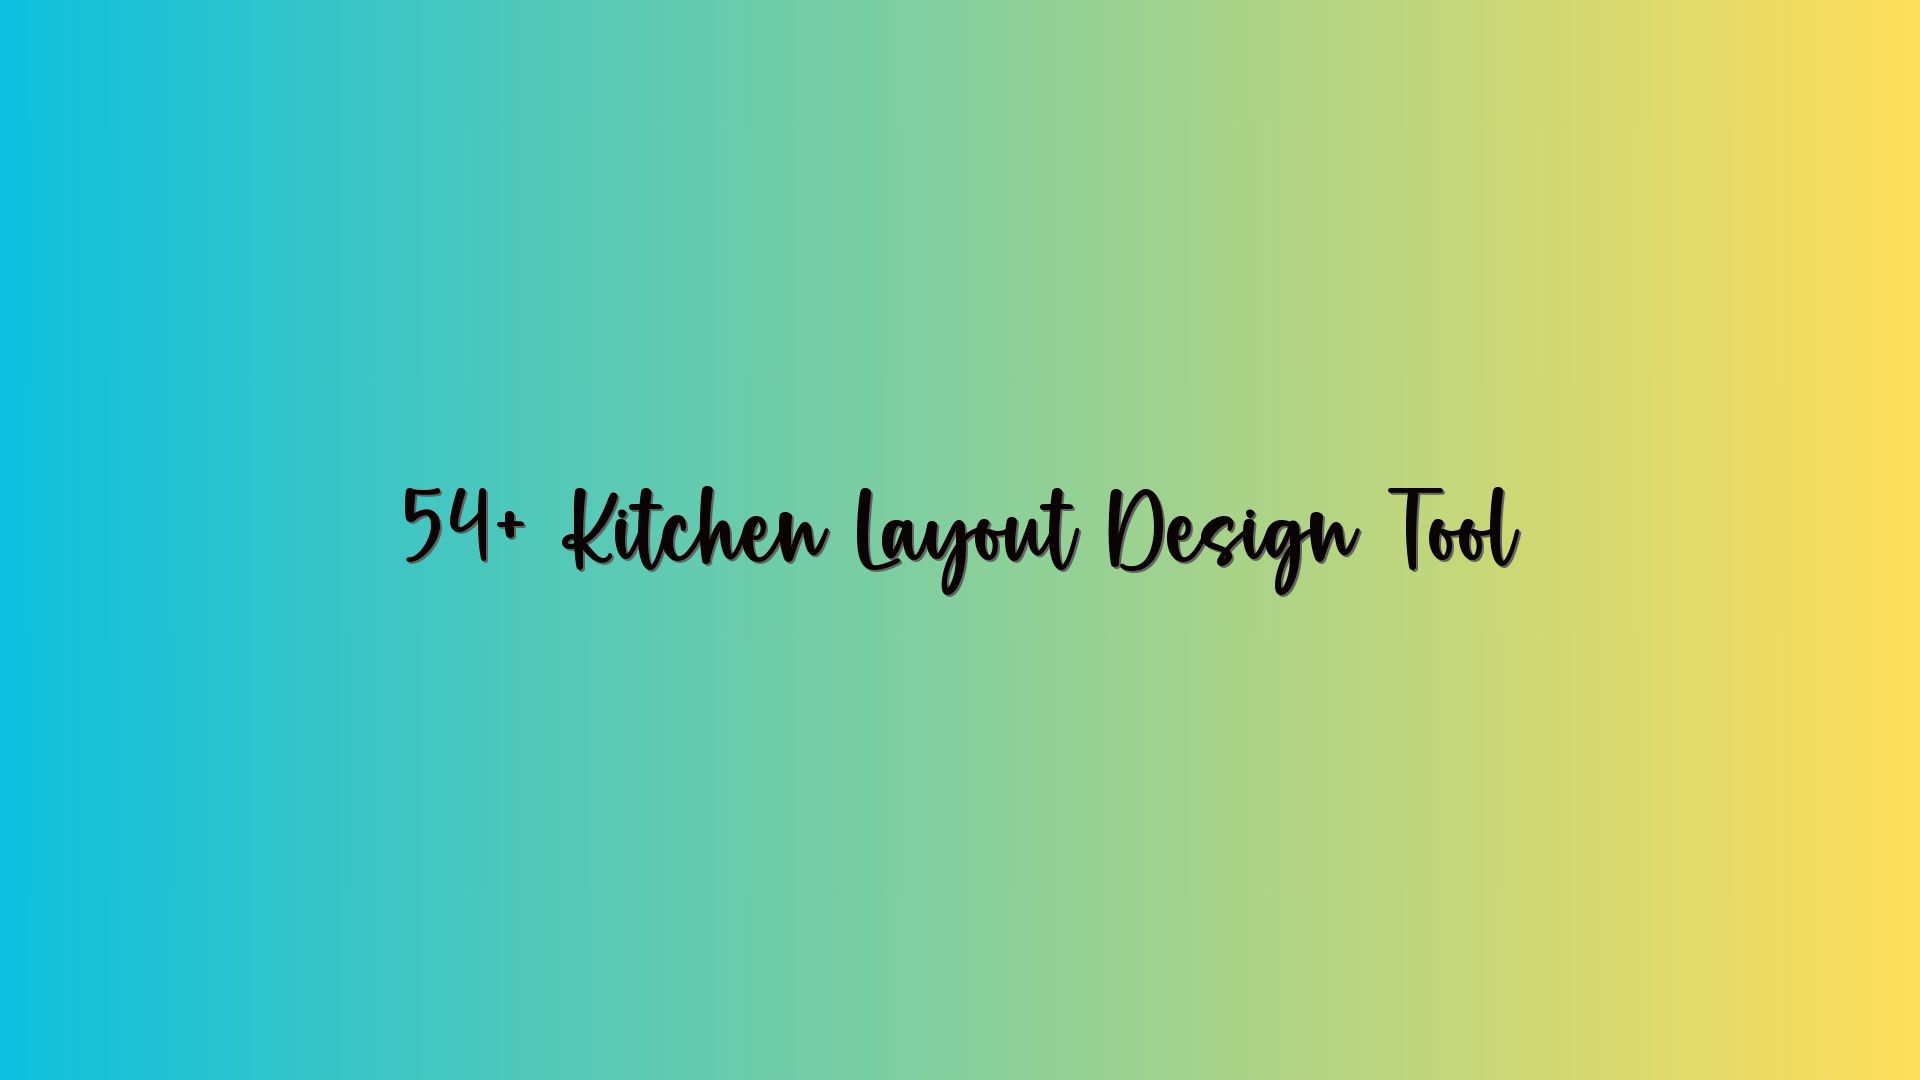 54+ Kitchen Layout Design Tool